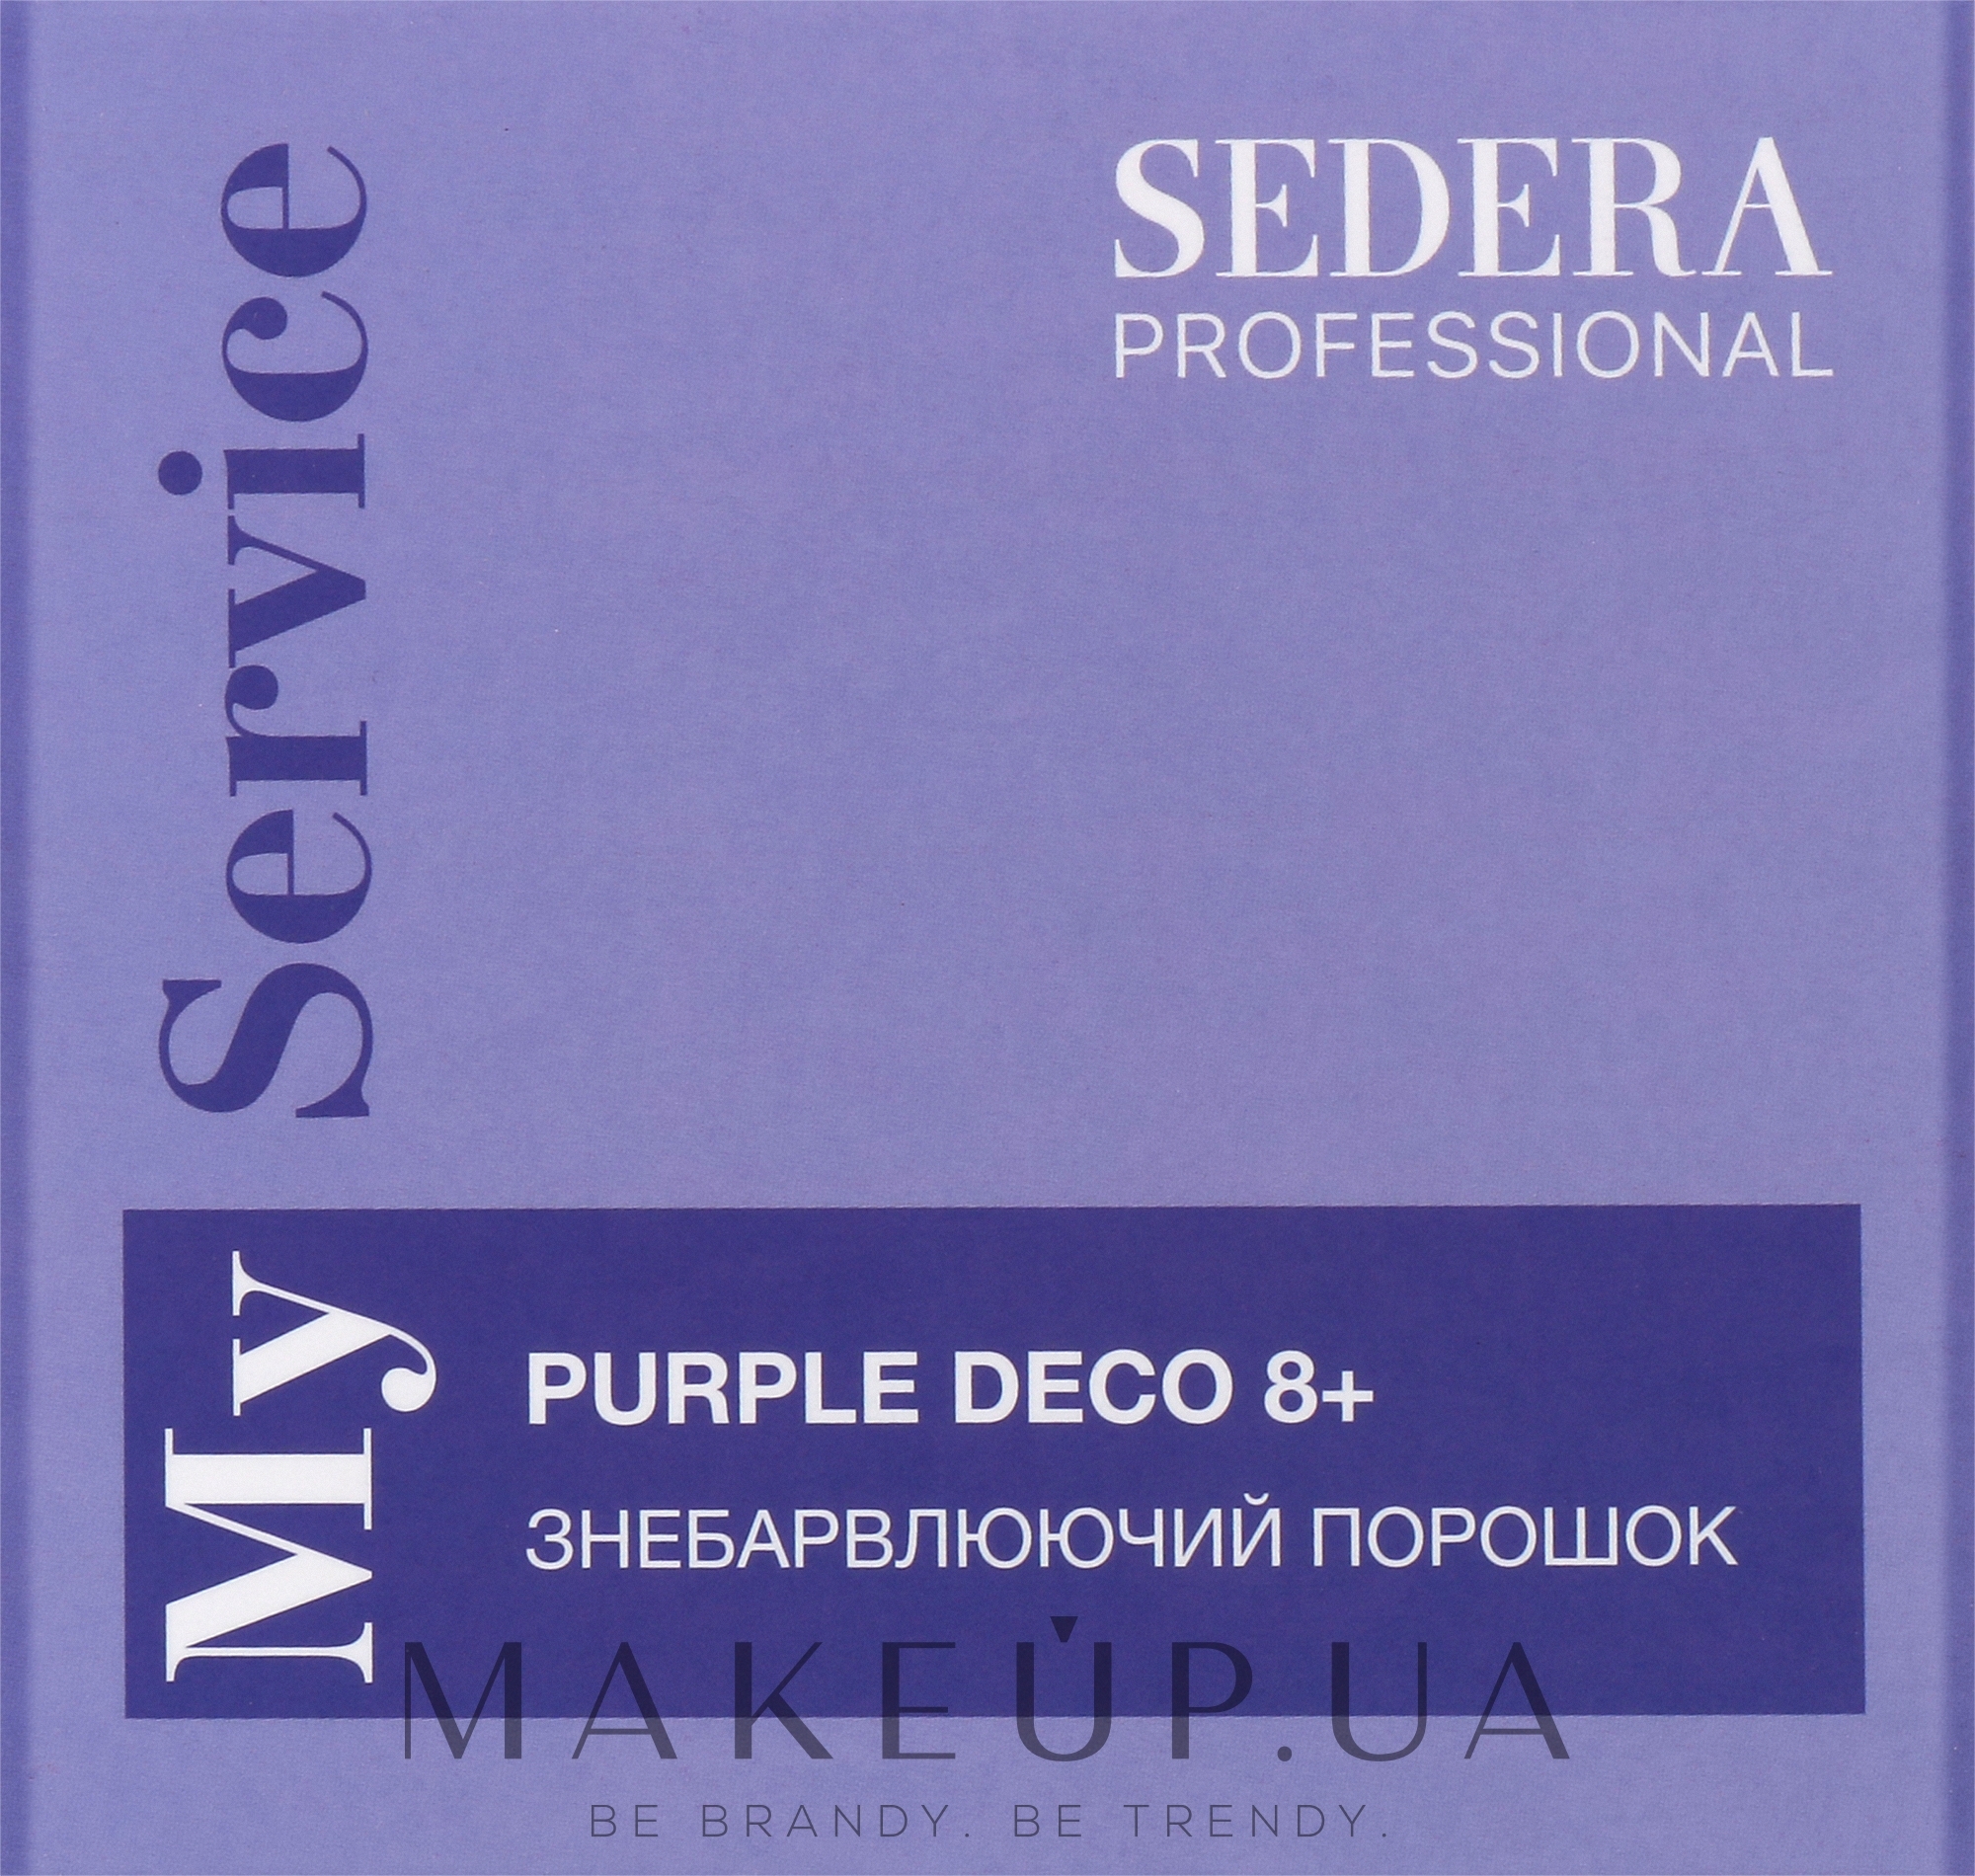 Знебарвлюючий порошок Purple Deco 8+ - Sedera Professional My Service Bleaching Powder  — фото 500g